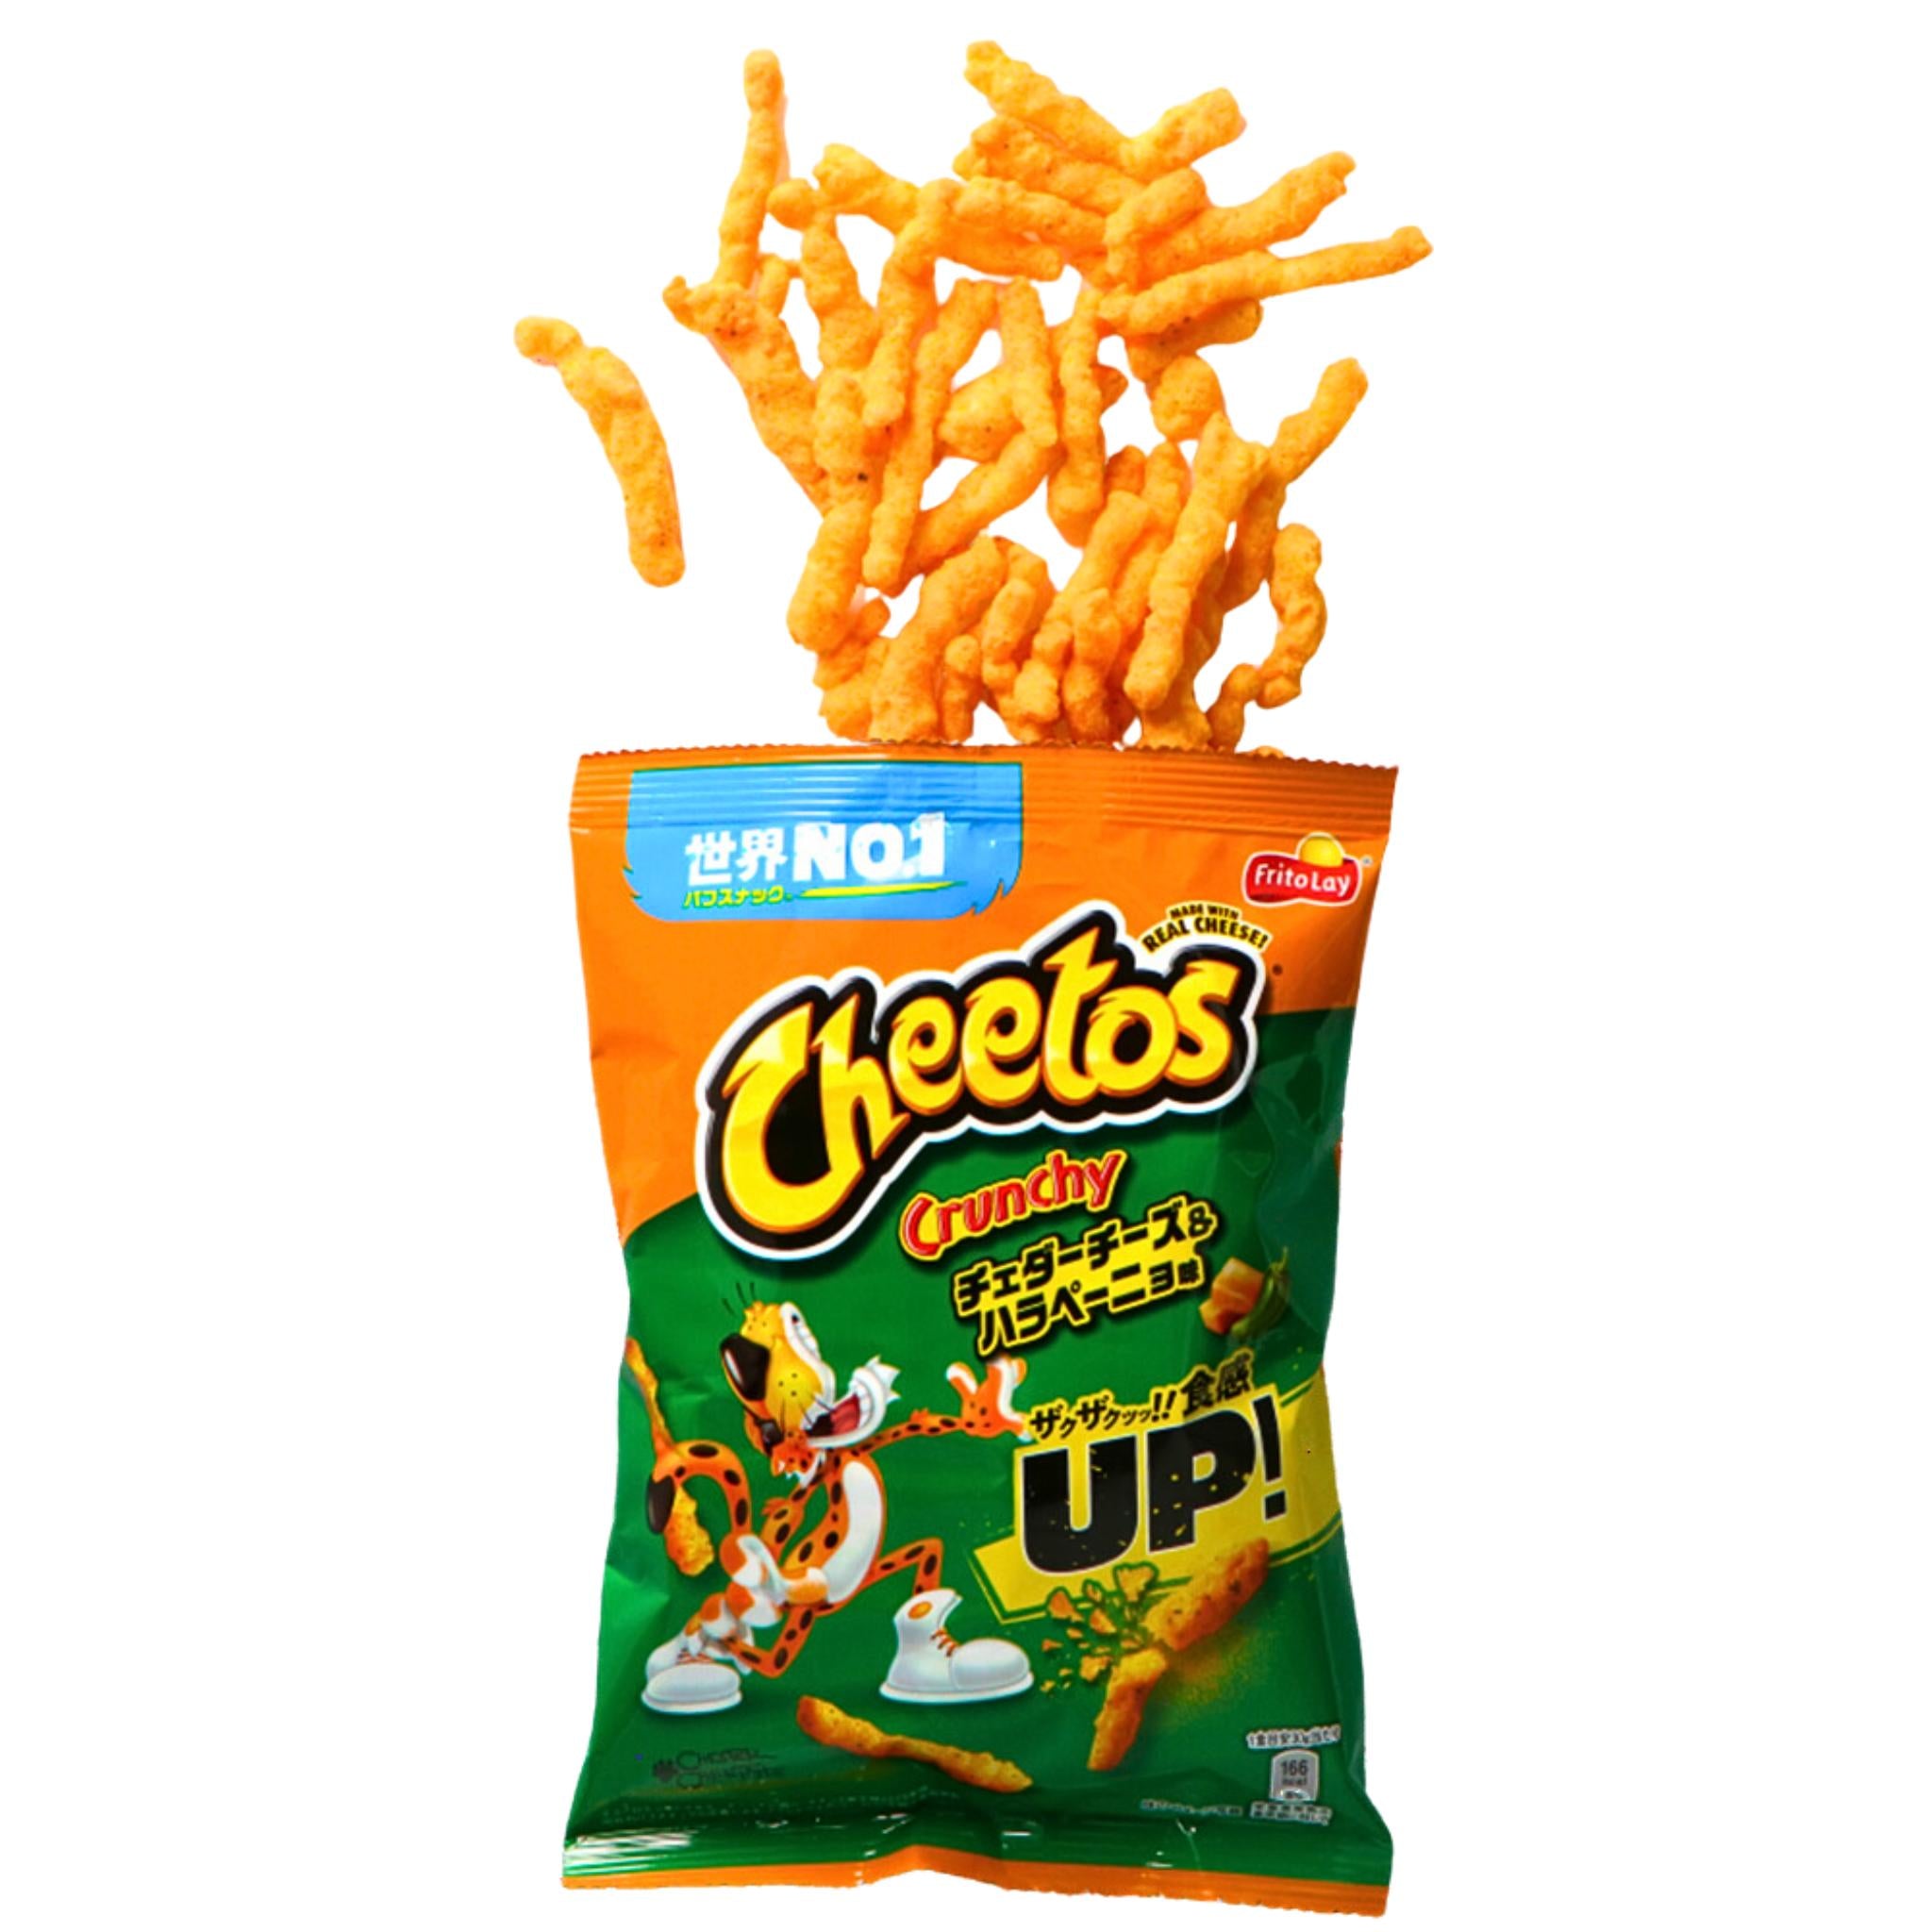 Cheetos Crunchy Cheddar Cheese &amp; Jalapeno - 75g (JAPANESE)